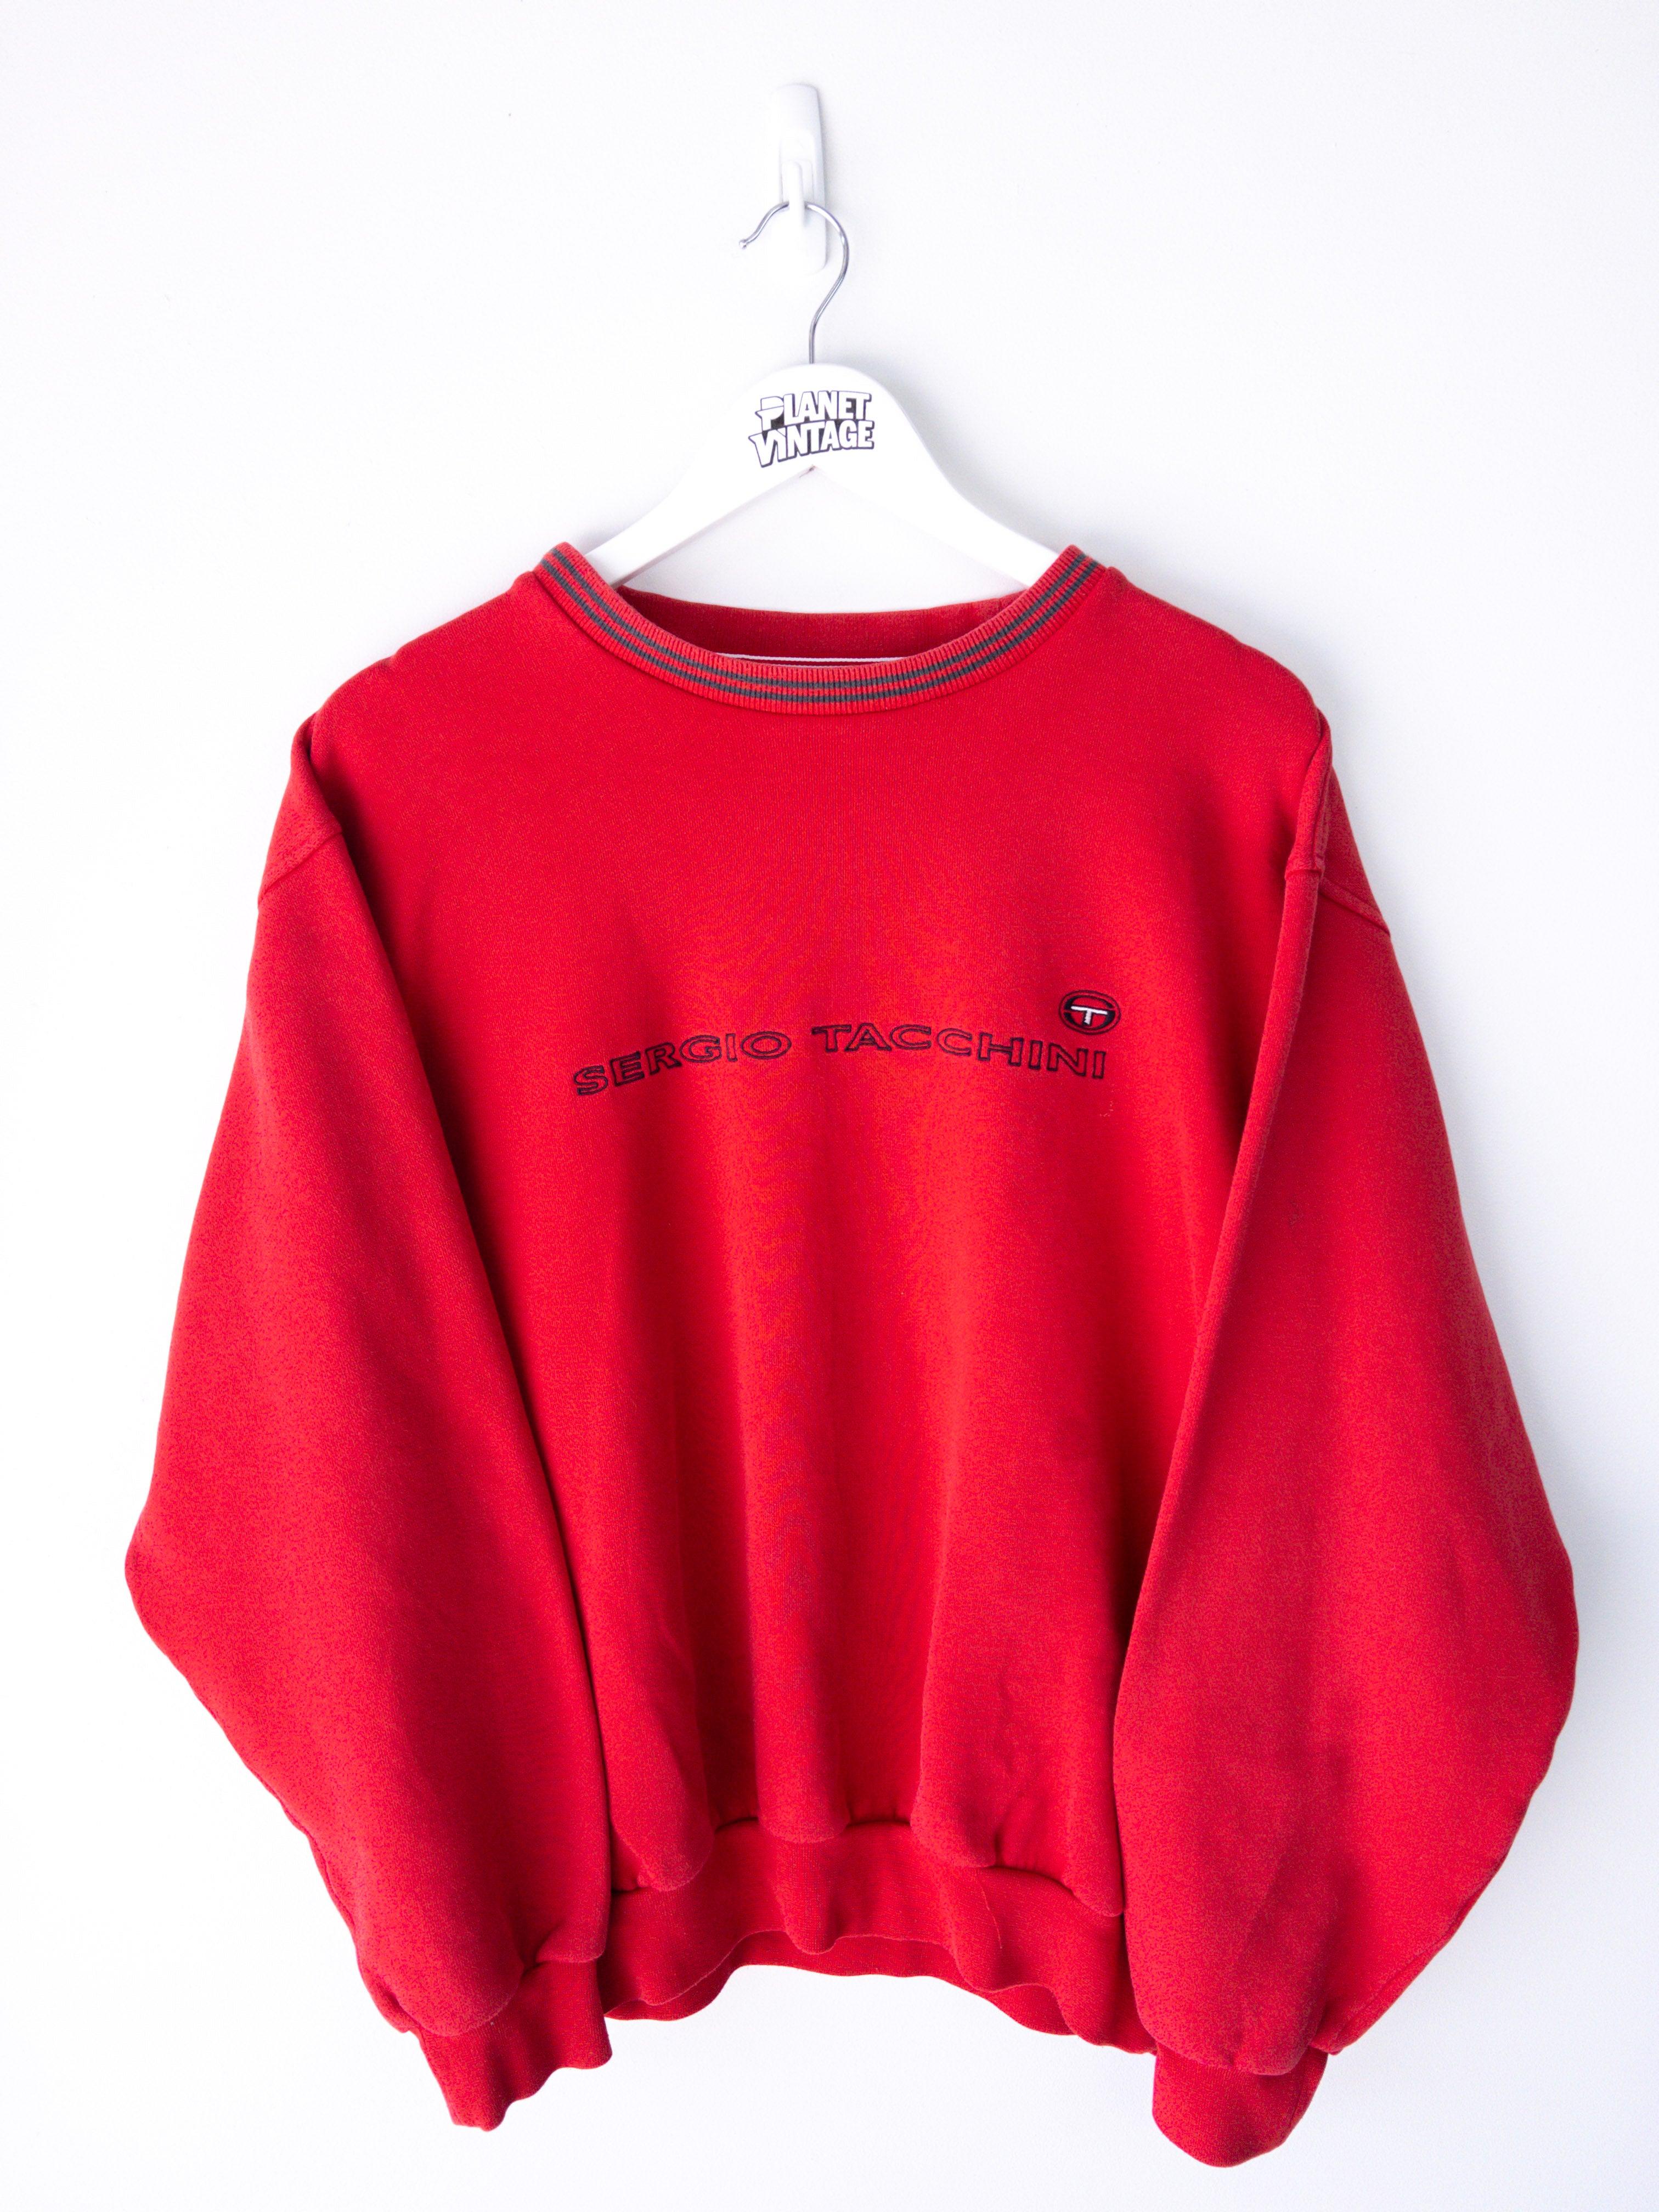 Vintage Sergio Tacchini Sweatshirt (L) - Planet Vintage Store